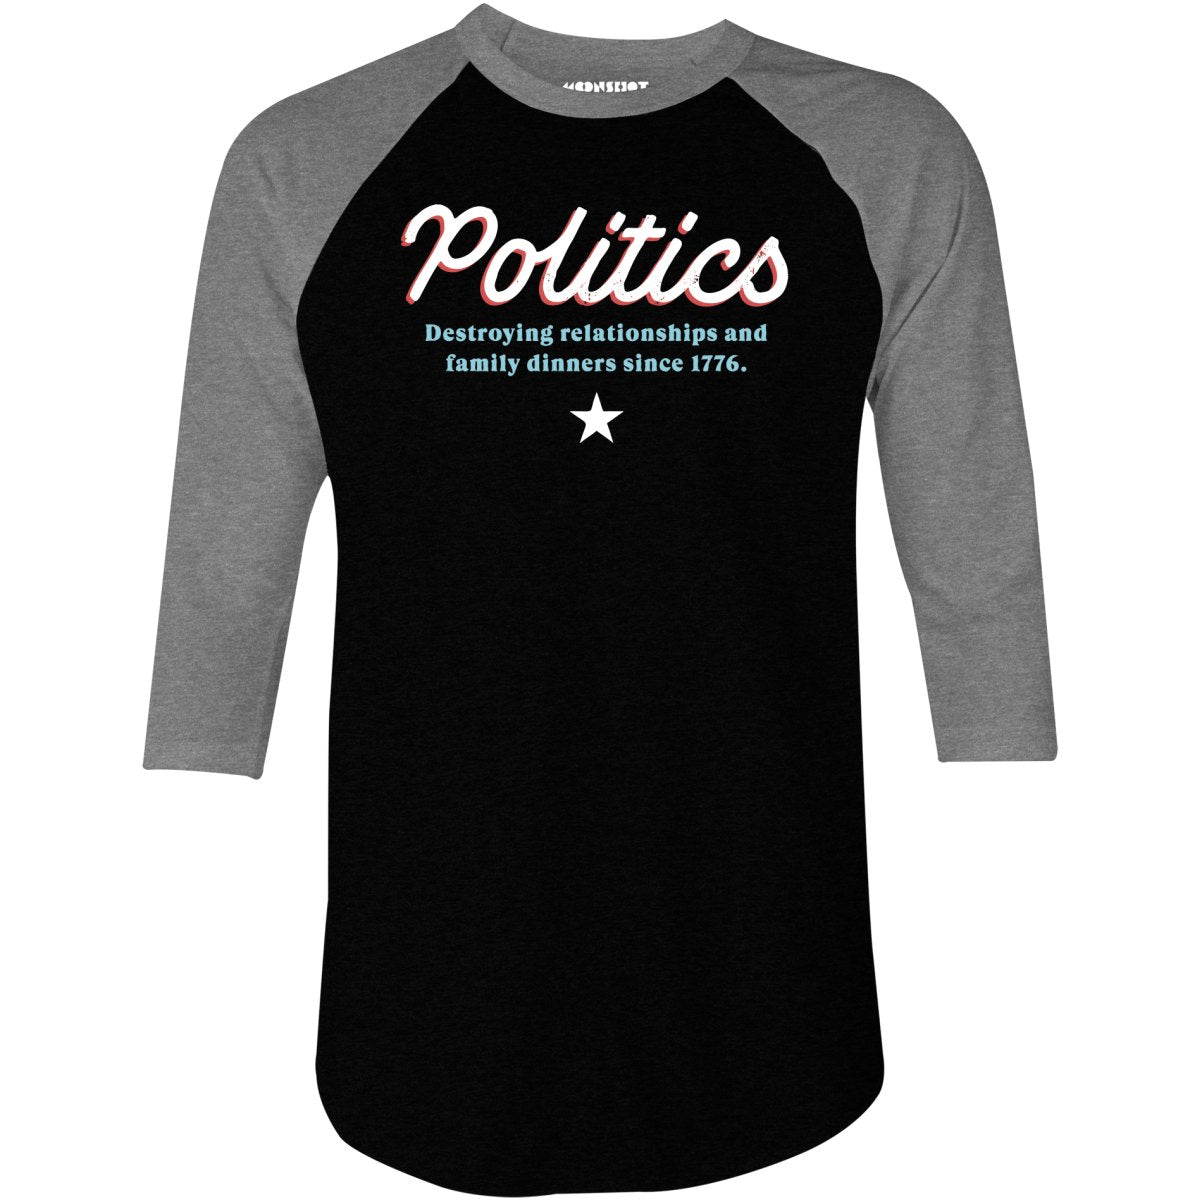 Politics - 3/4 Sleeve Raglan T-Shirt